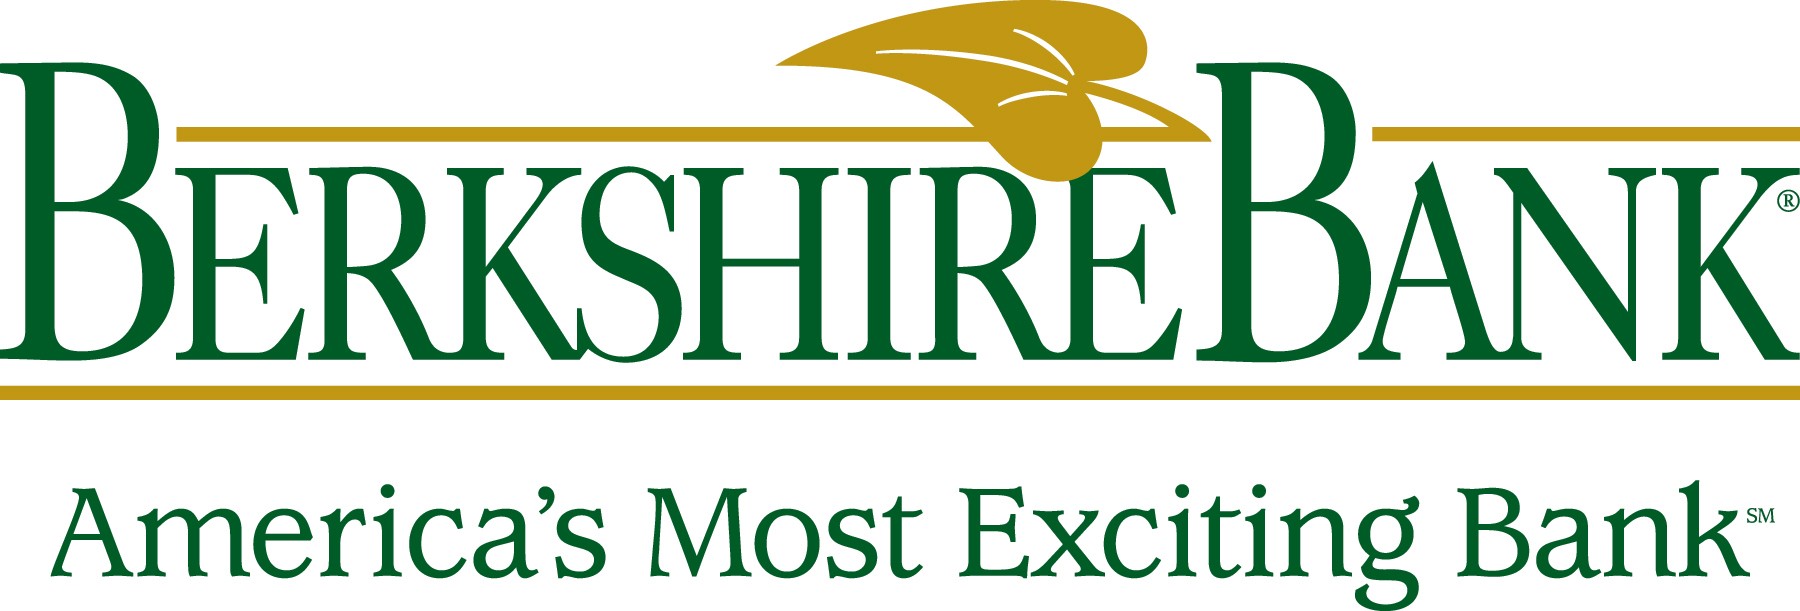 Berkshire Bank Logo photo - 1